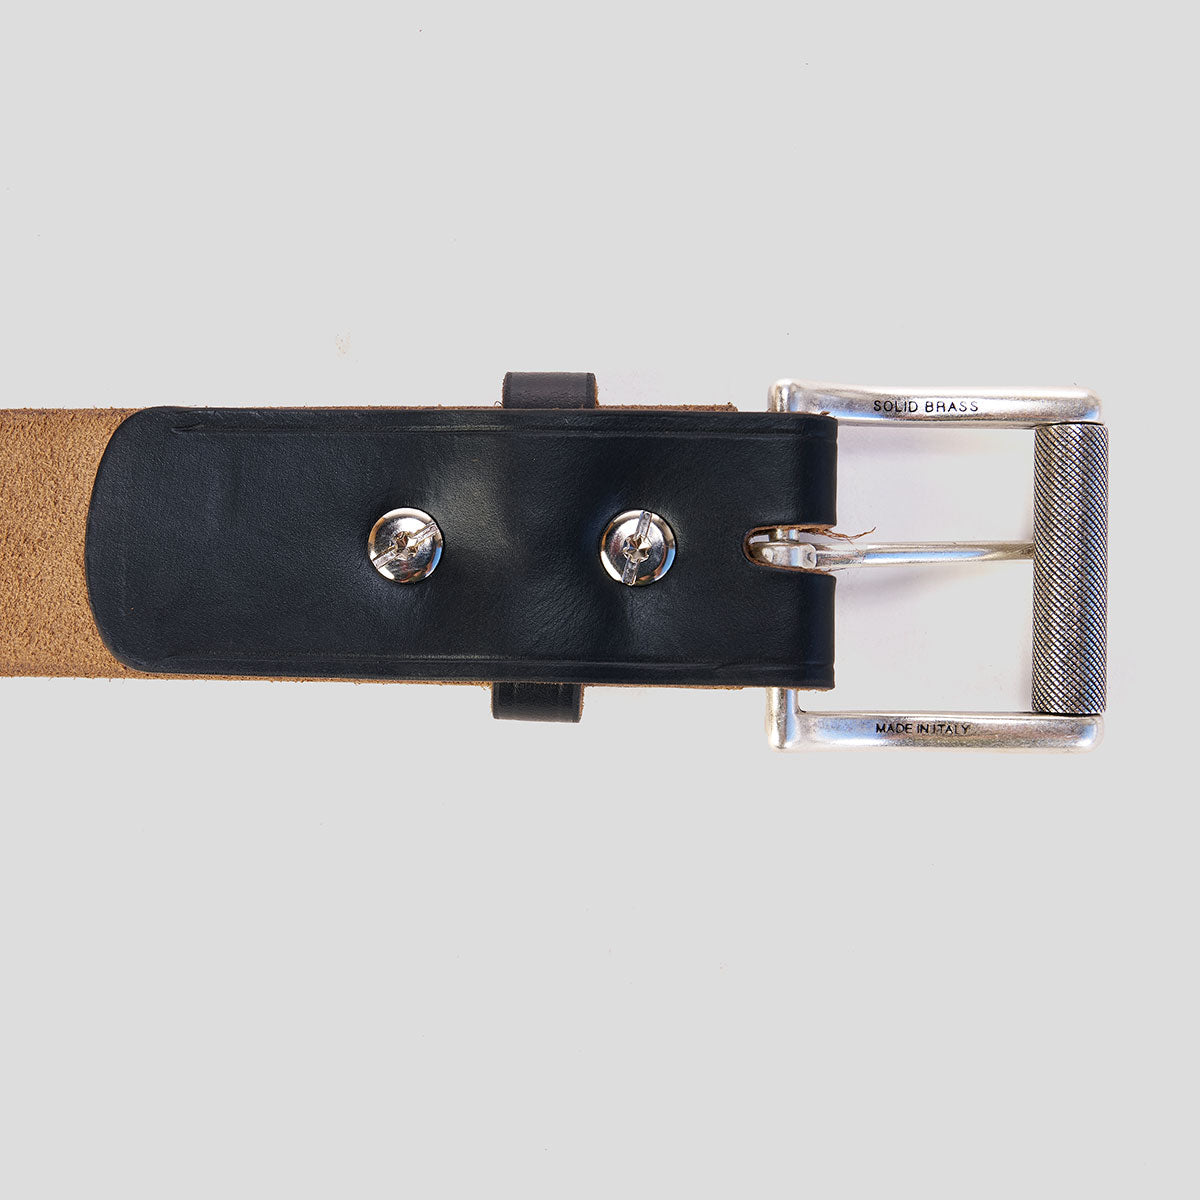 Original Belt (Brass/Black)  Leather Works & Designs by Oz